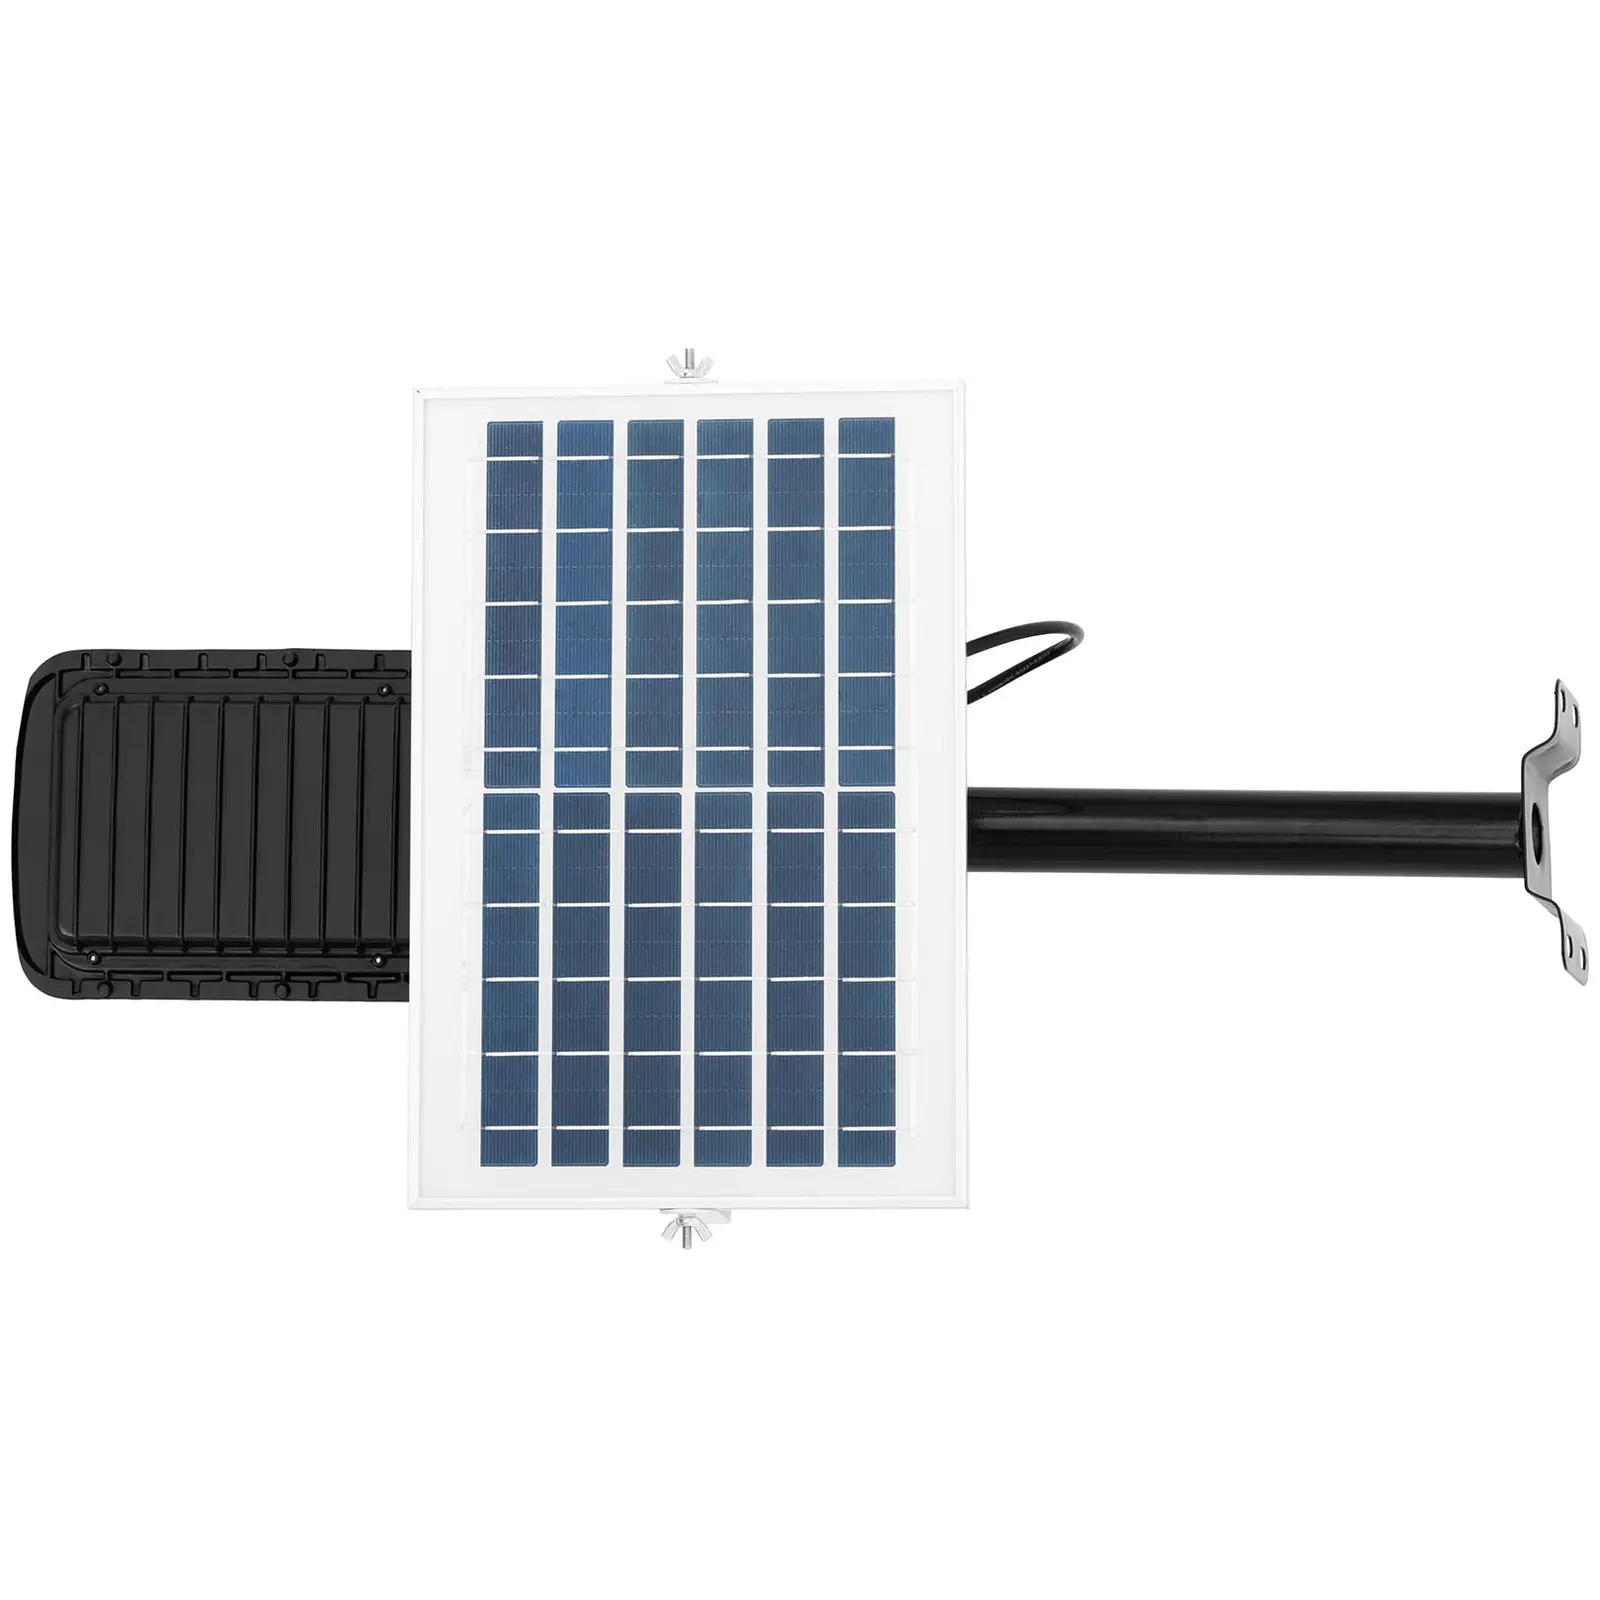 Solar outdoor light - 80 W - 6000 - 6500 K - 14 - 16 h - IP 65